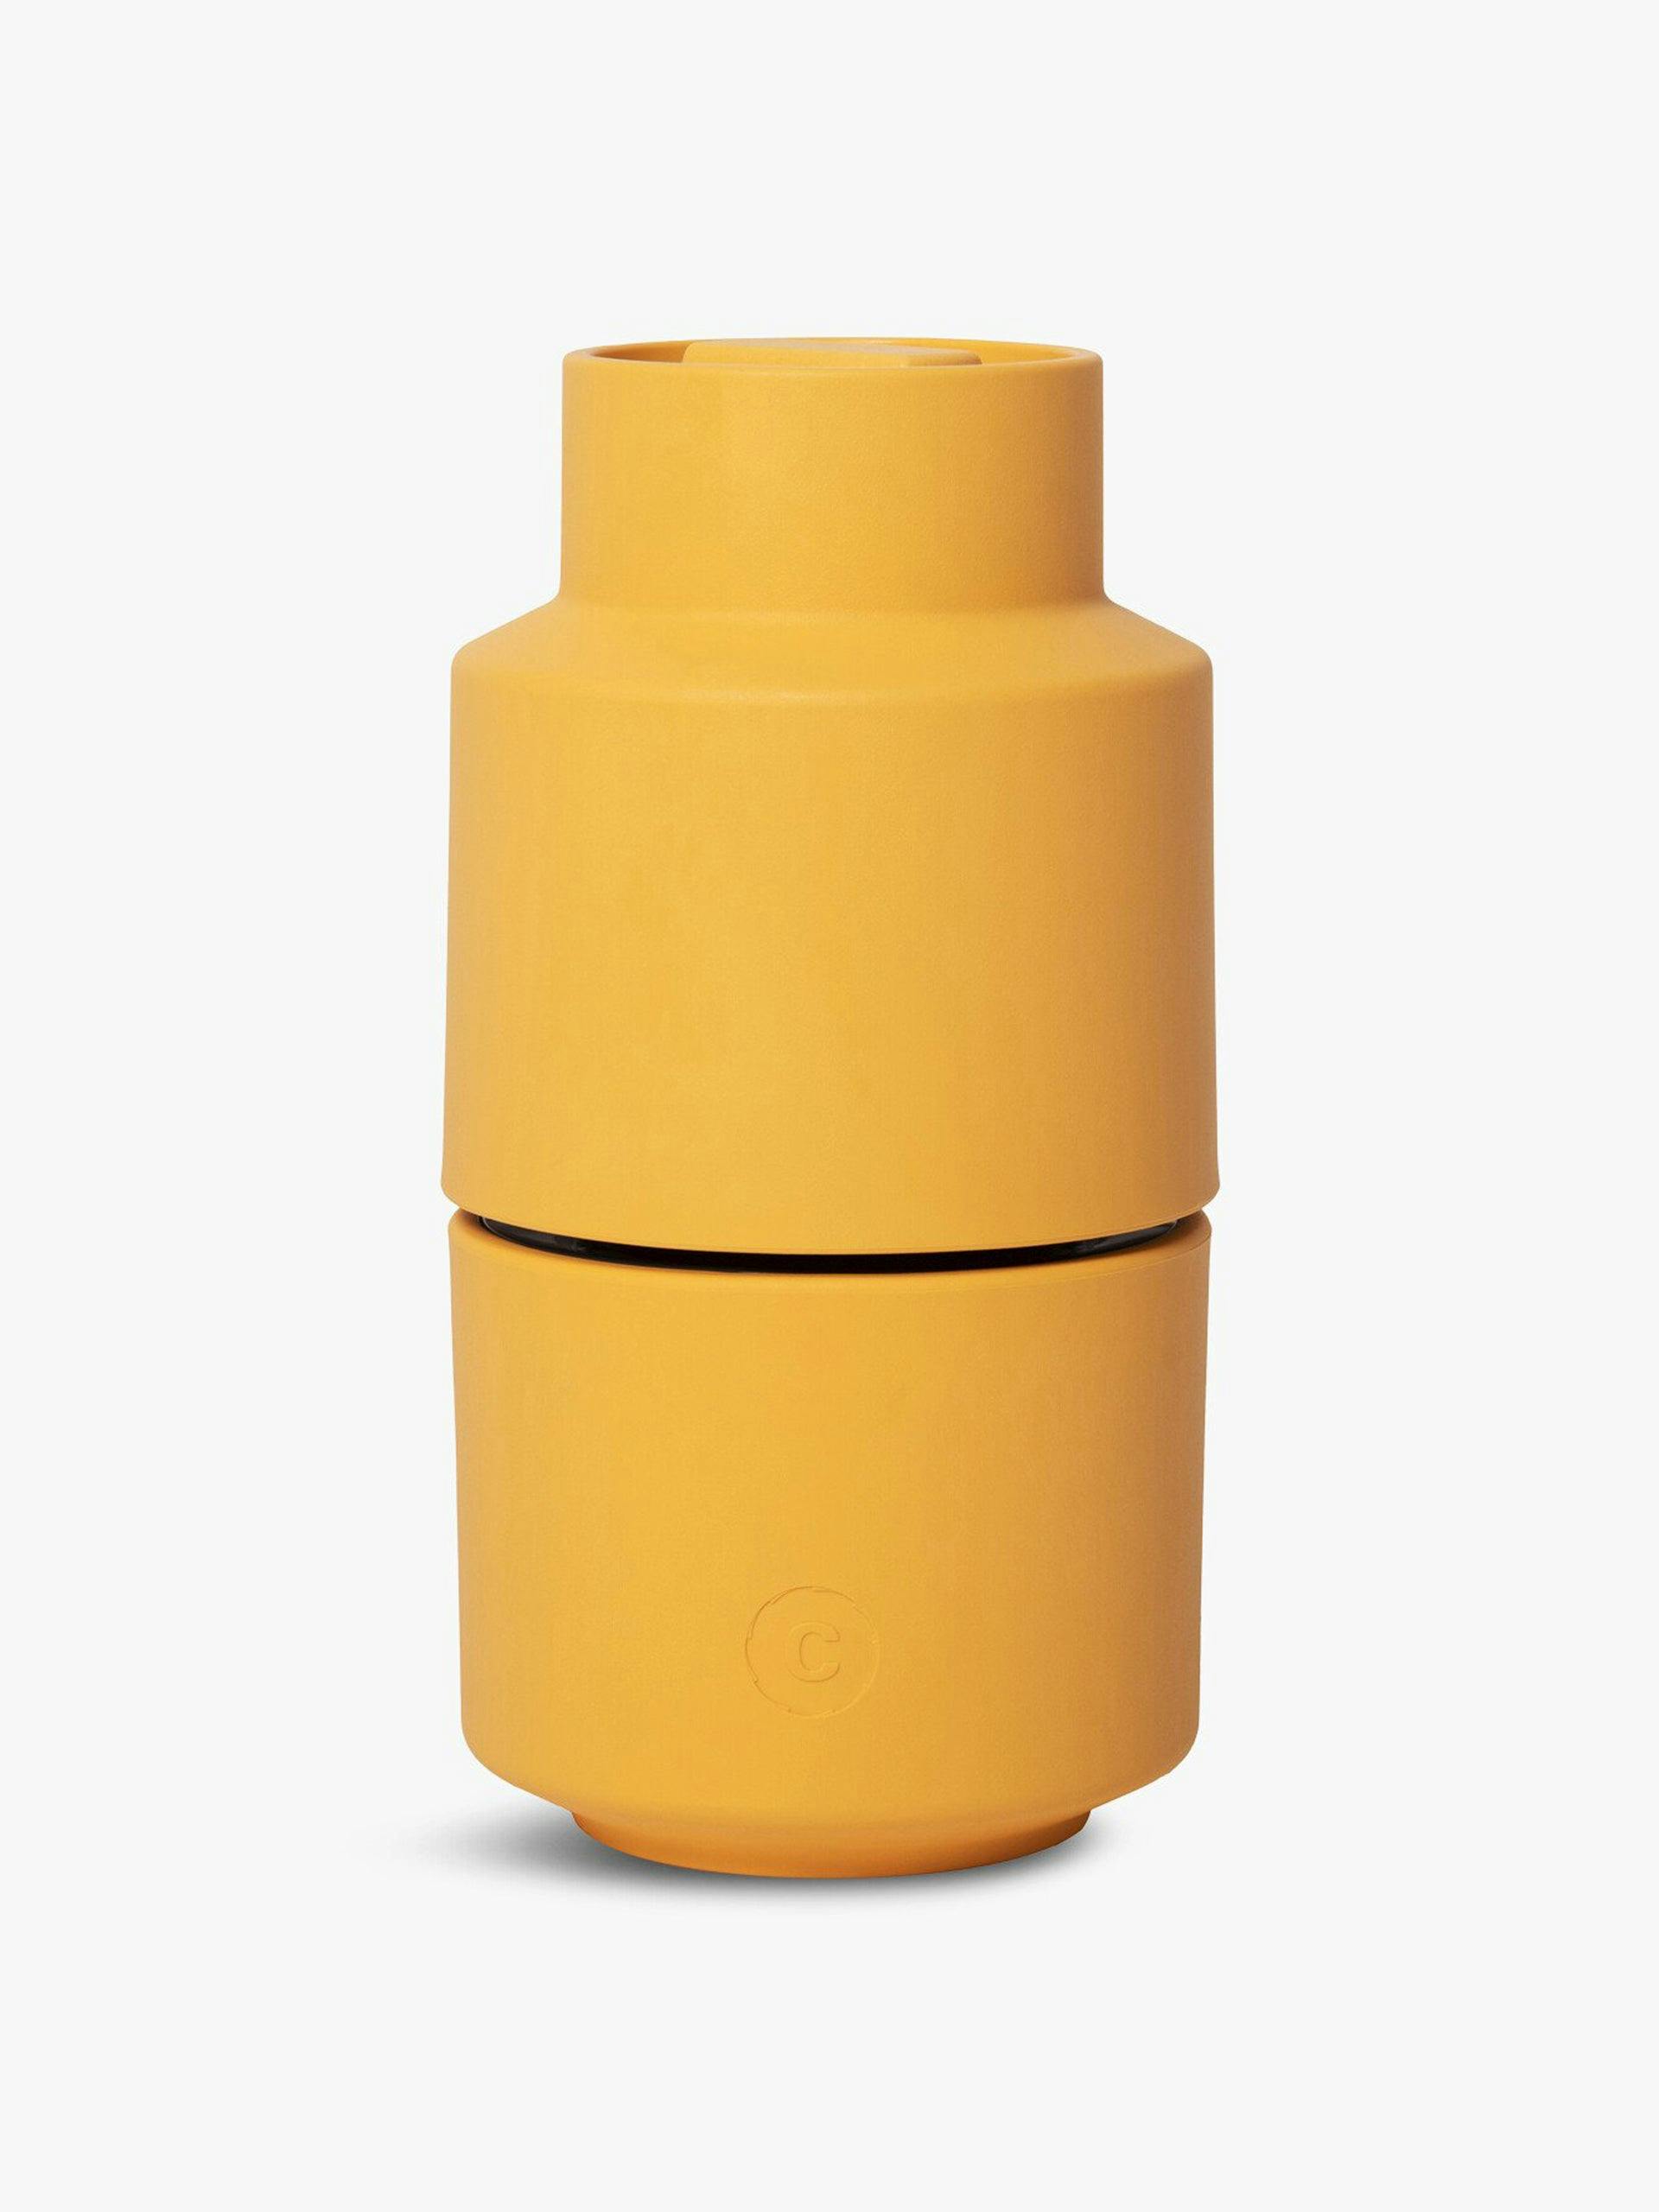 Yellow spice grinder